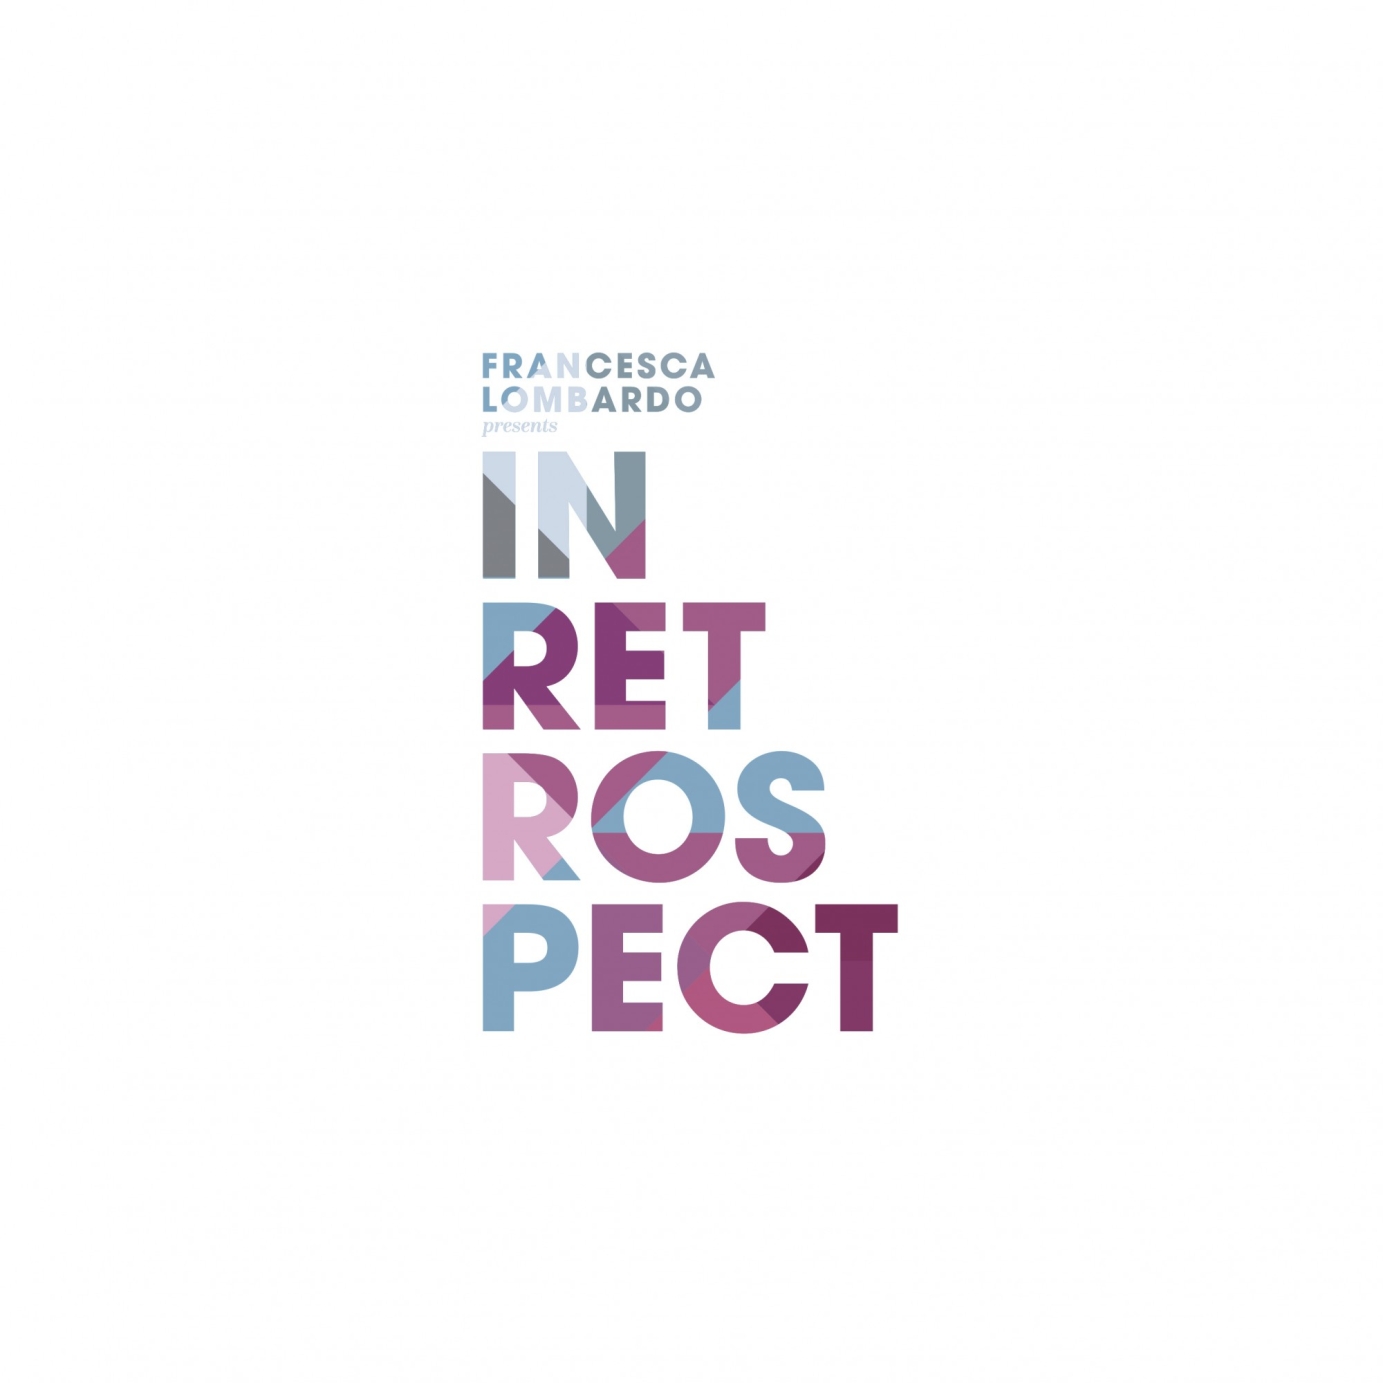 Francesca Lombardo presents: In Retrospect - Compilation Artwork